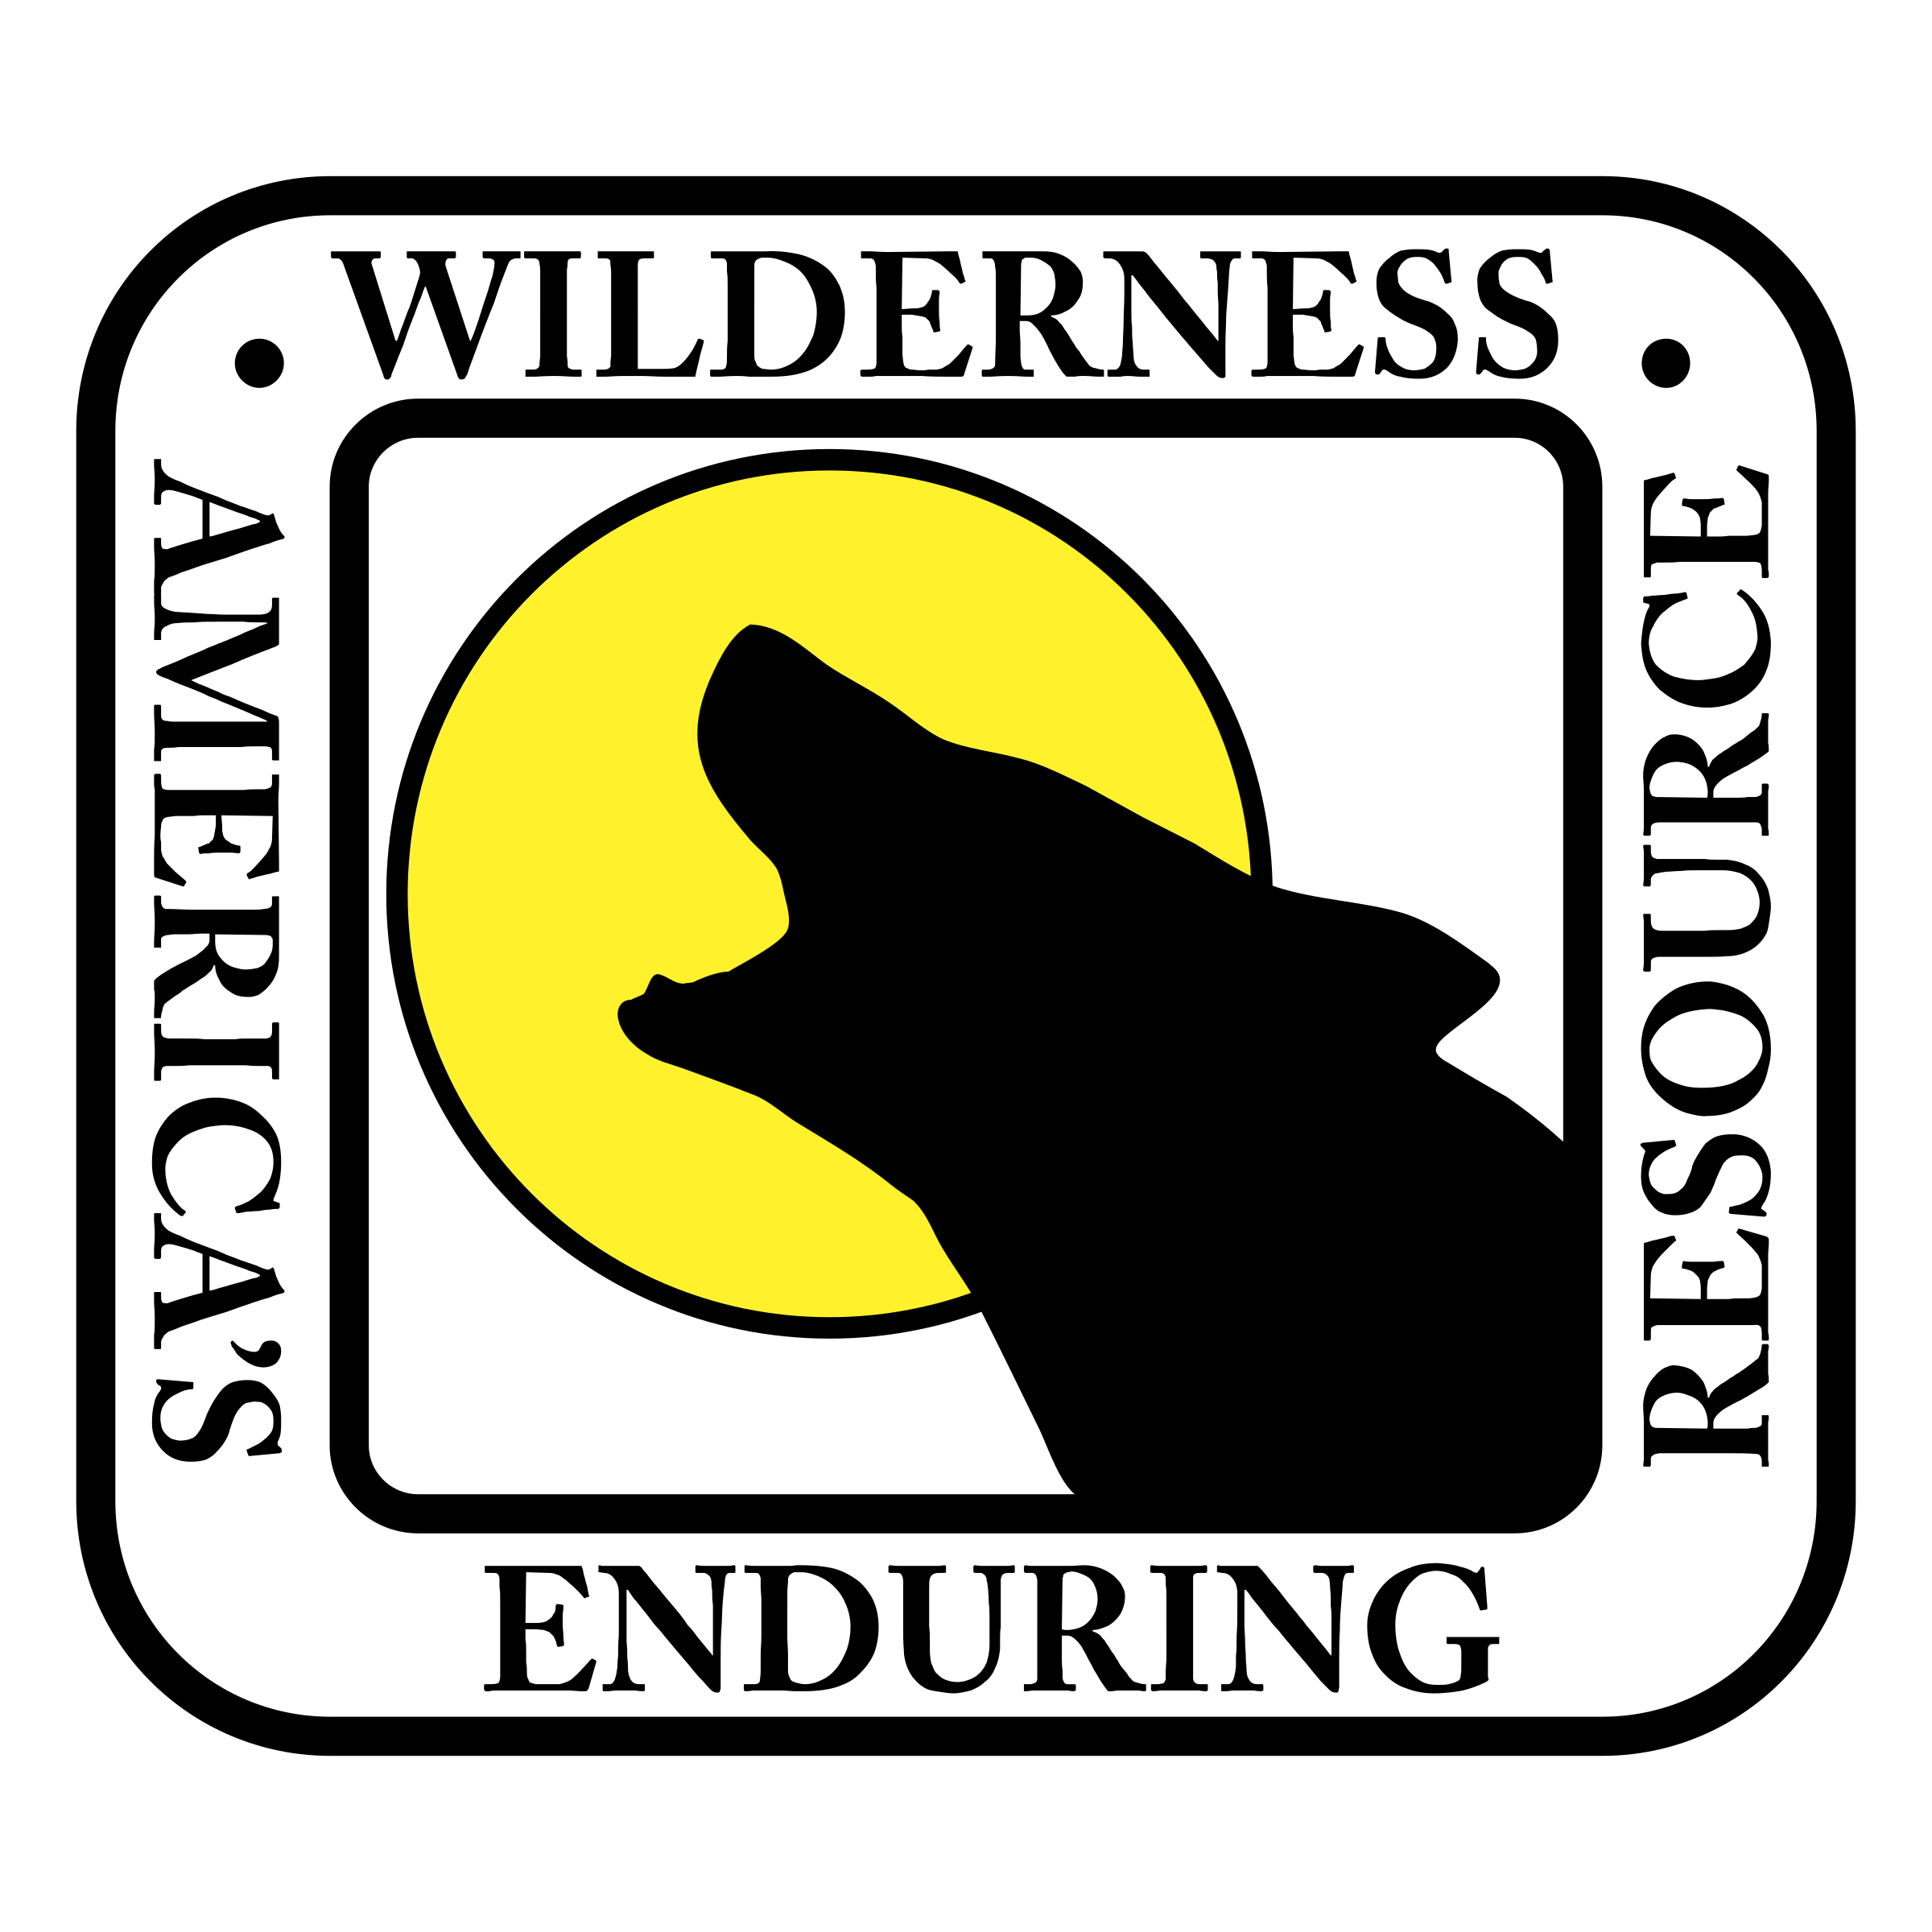 Weiand Logo - Wilderness Logo PNG Transparent & SVG Vector - Freebie Supply